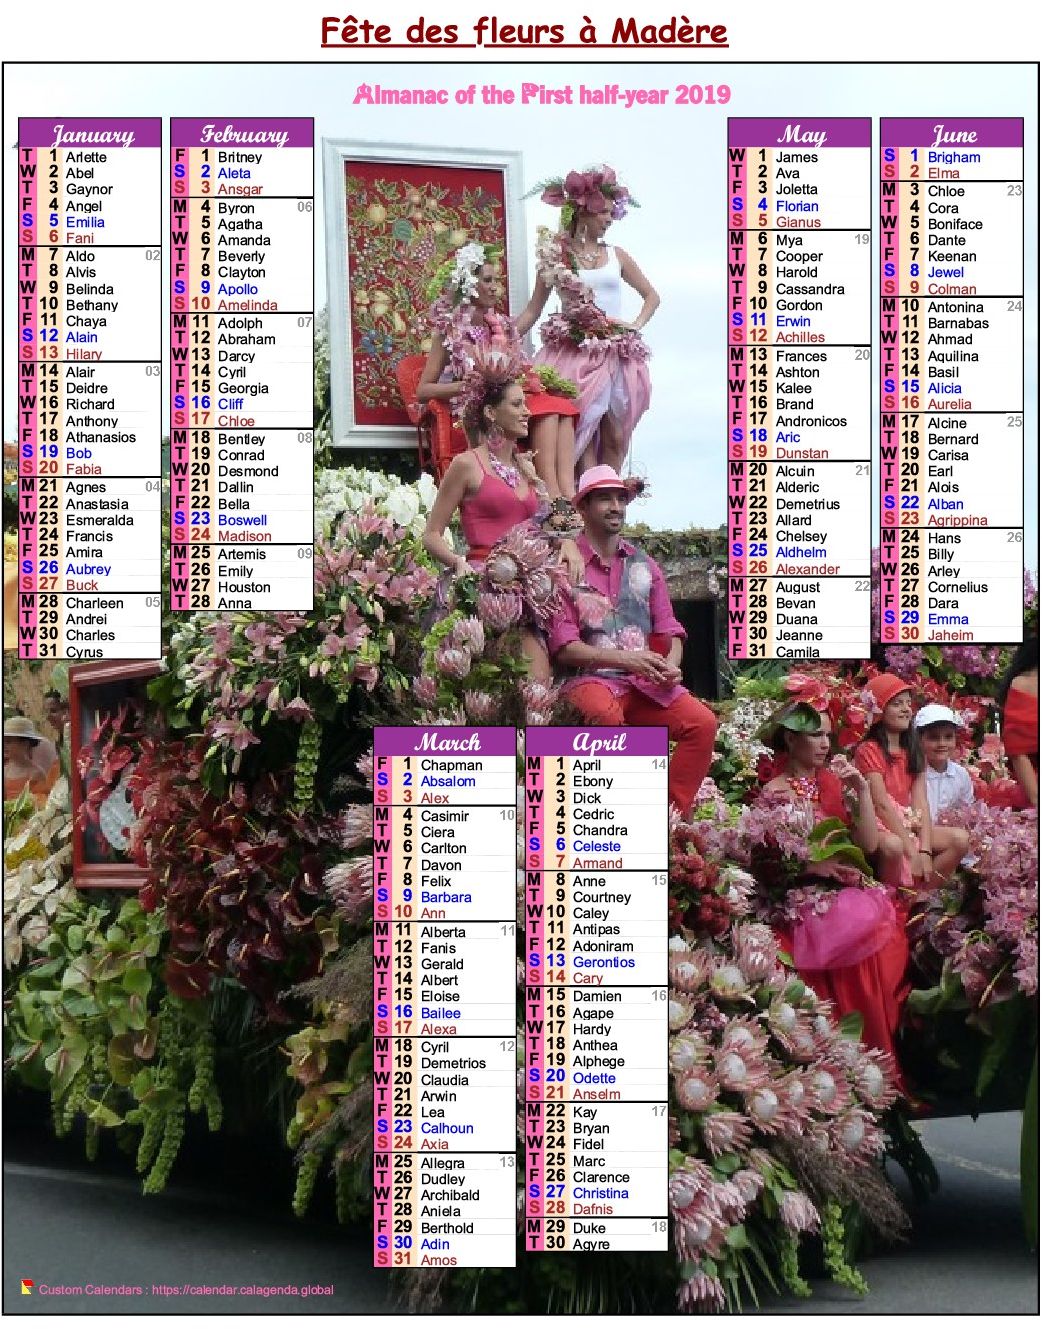 Calendar 2019 half-year flower festival in Madeira